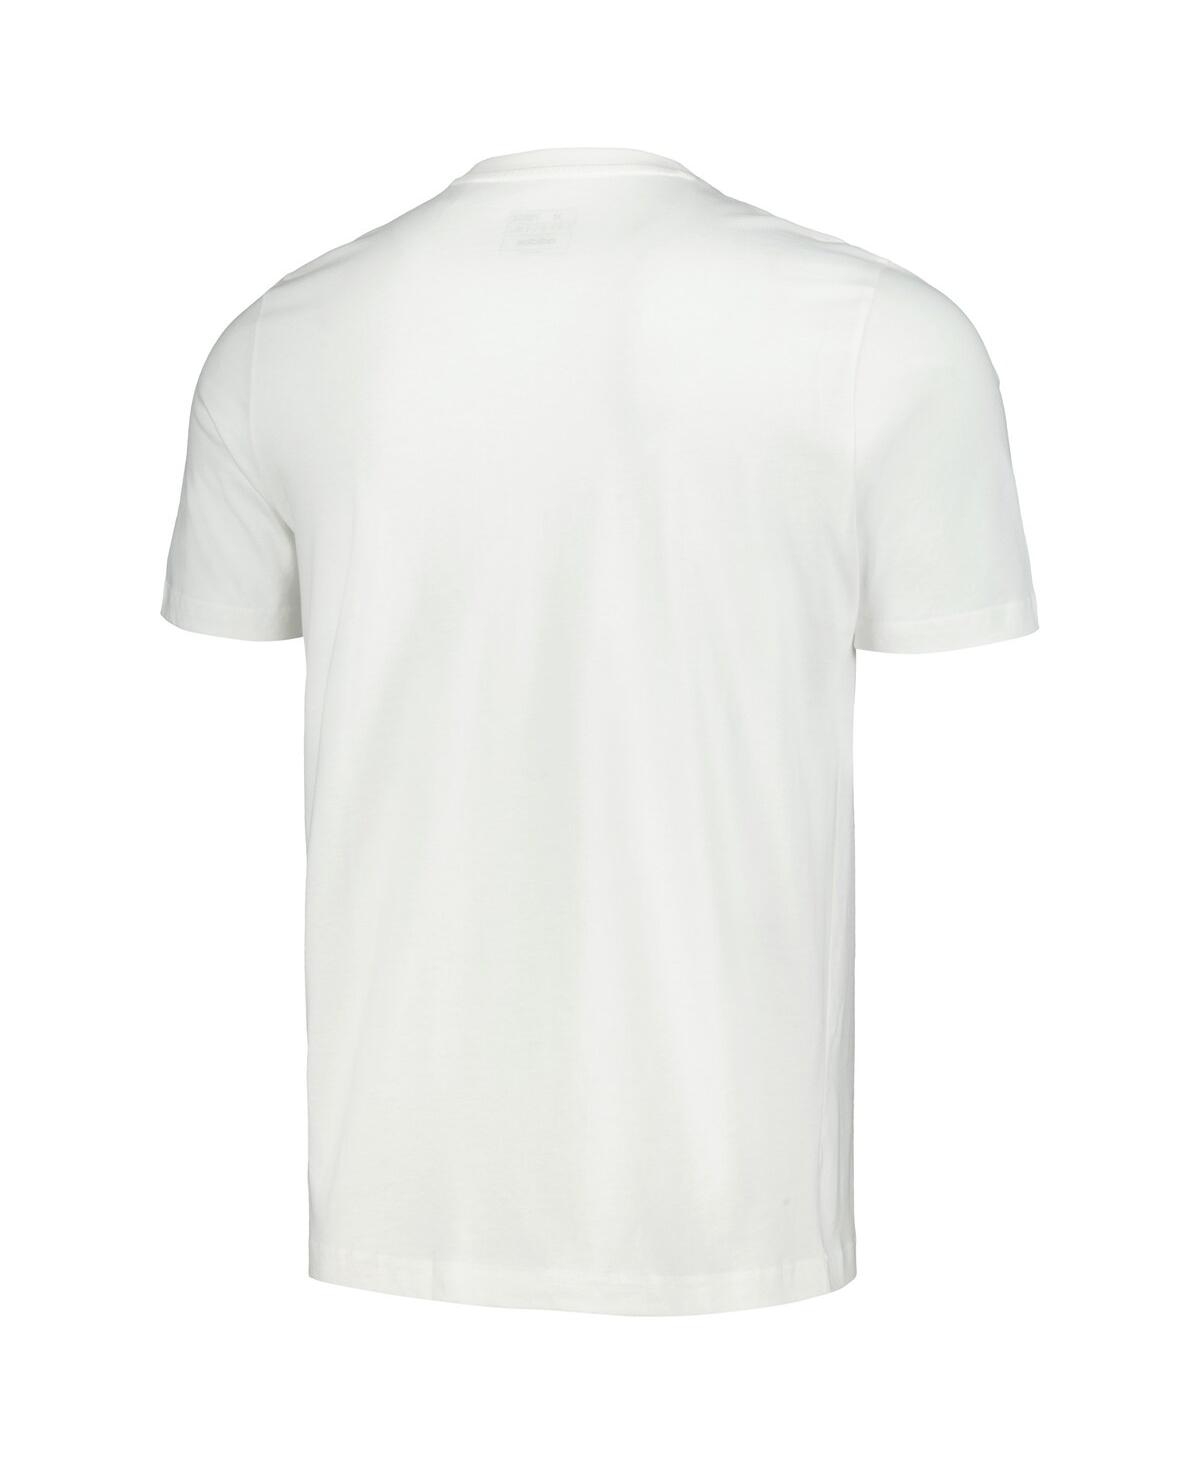 Shop Adidas Originals Men's Adidas White Argentina National Team 2024 Dna T-shirt